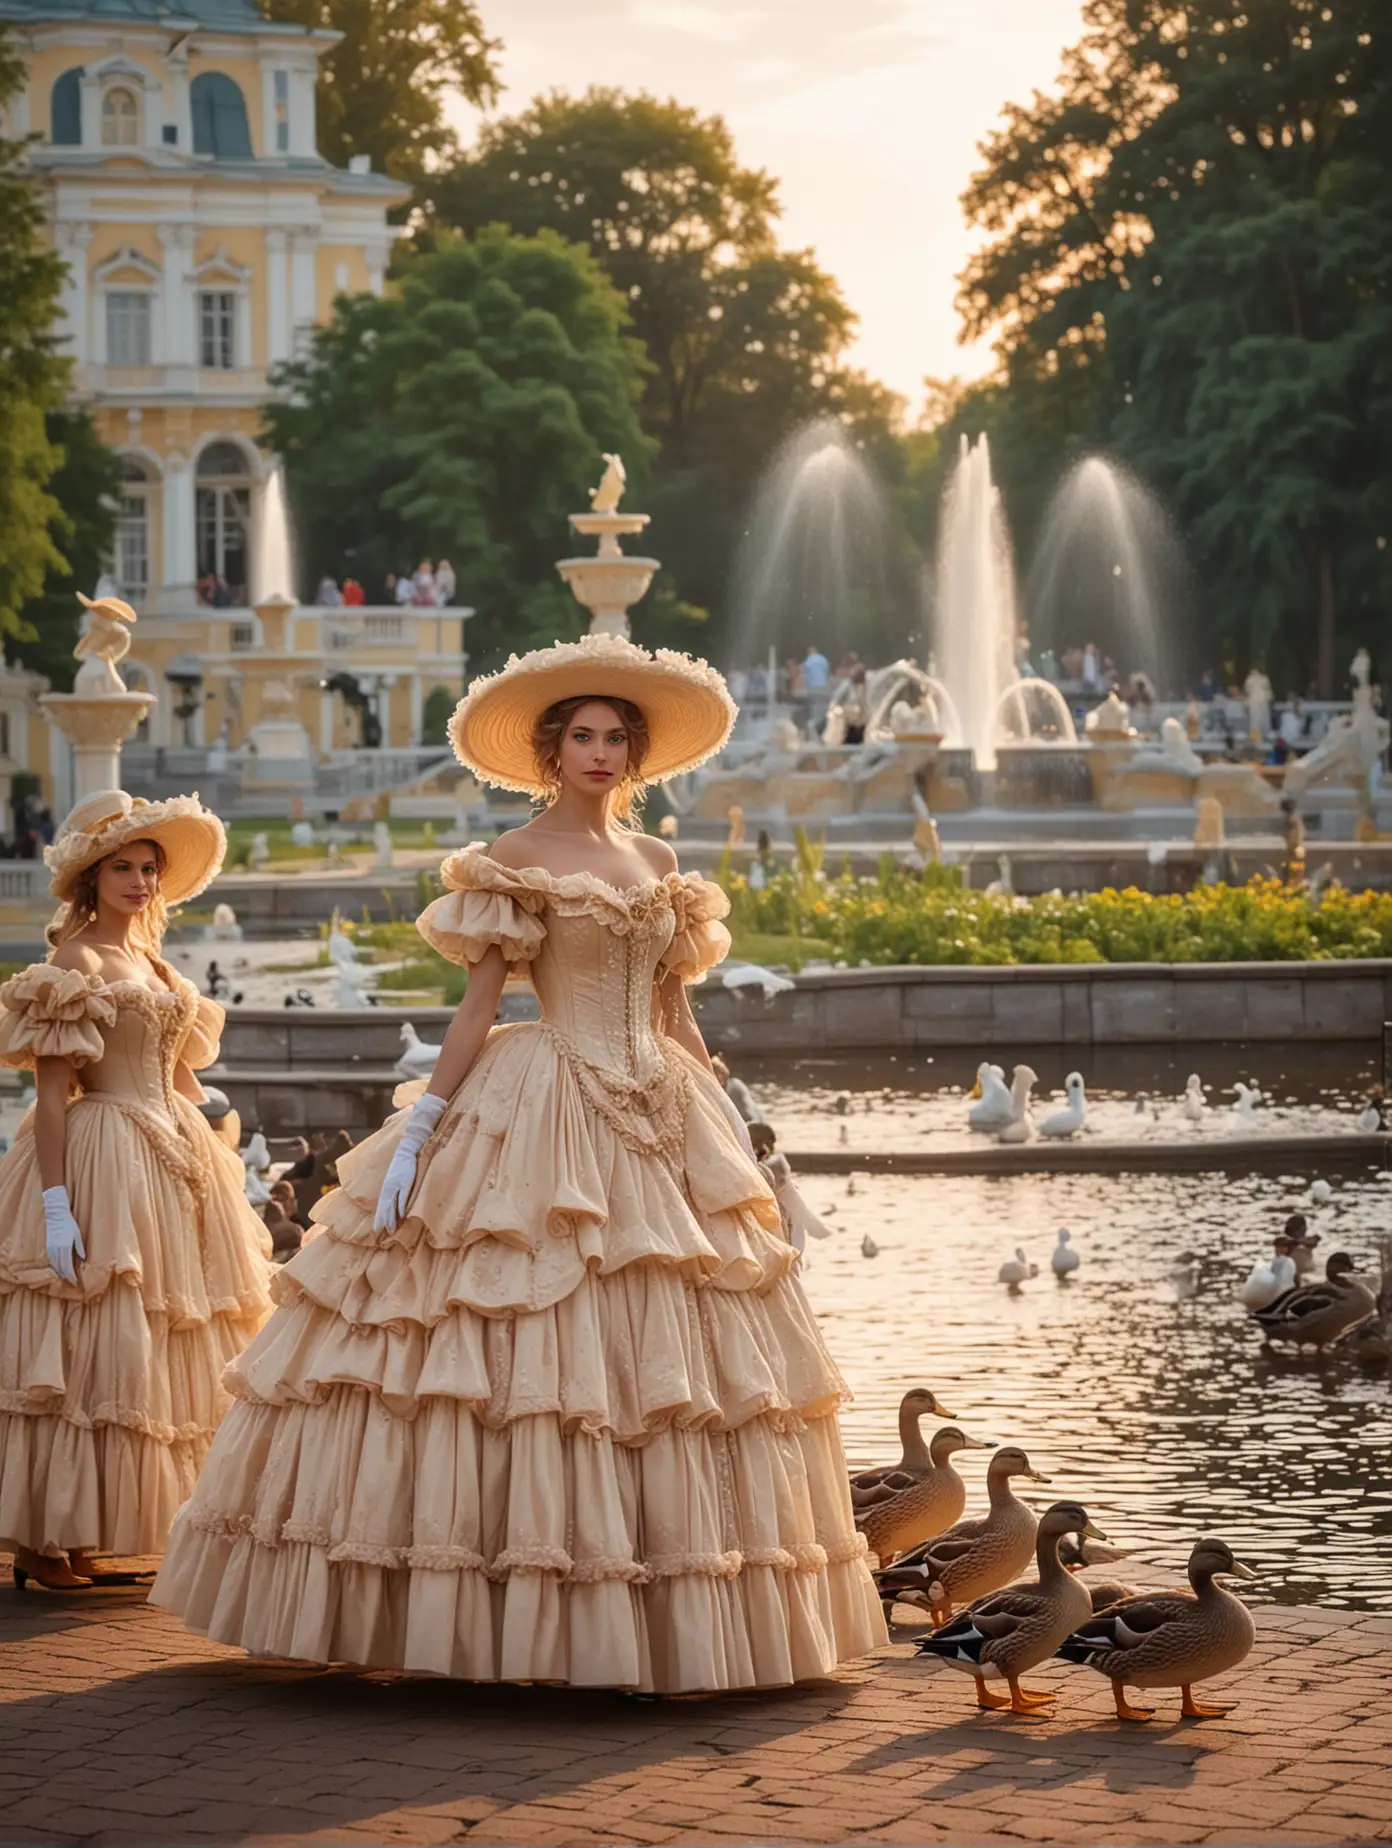 Ducks-in-Elegant-Attire-at-Peterhof-Park-Fountain-Scene